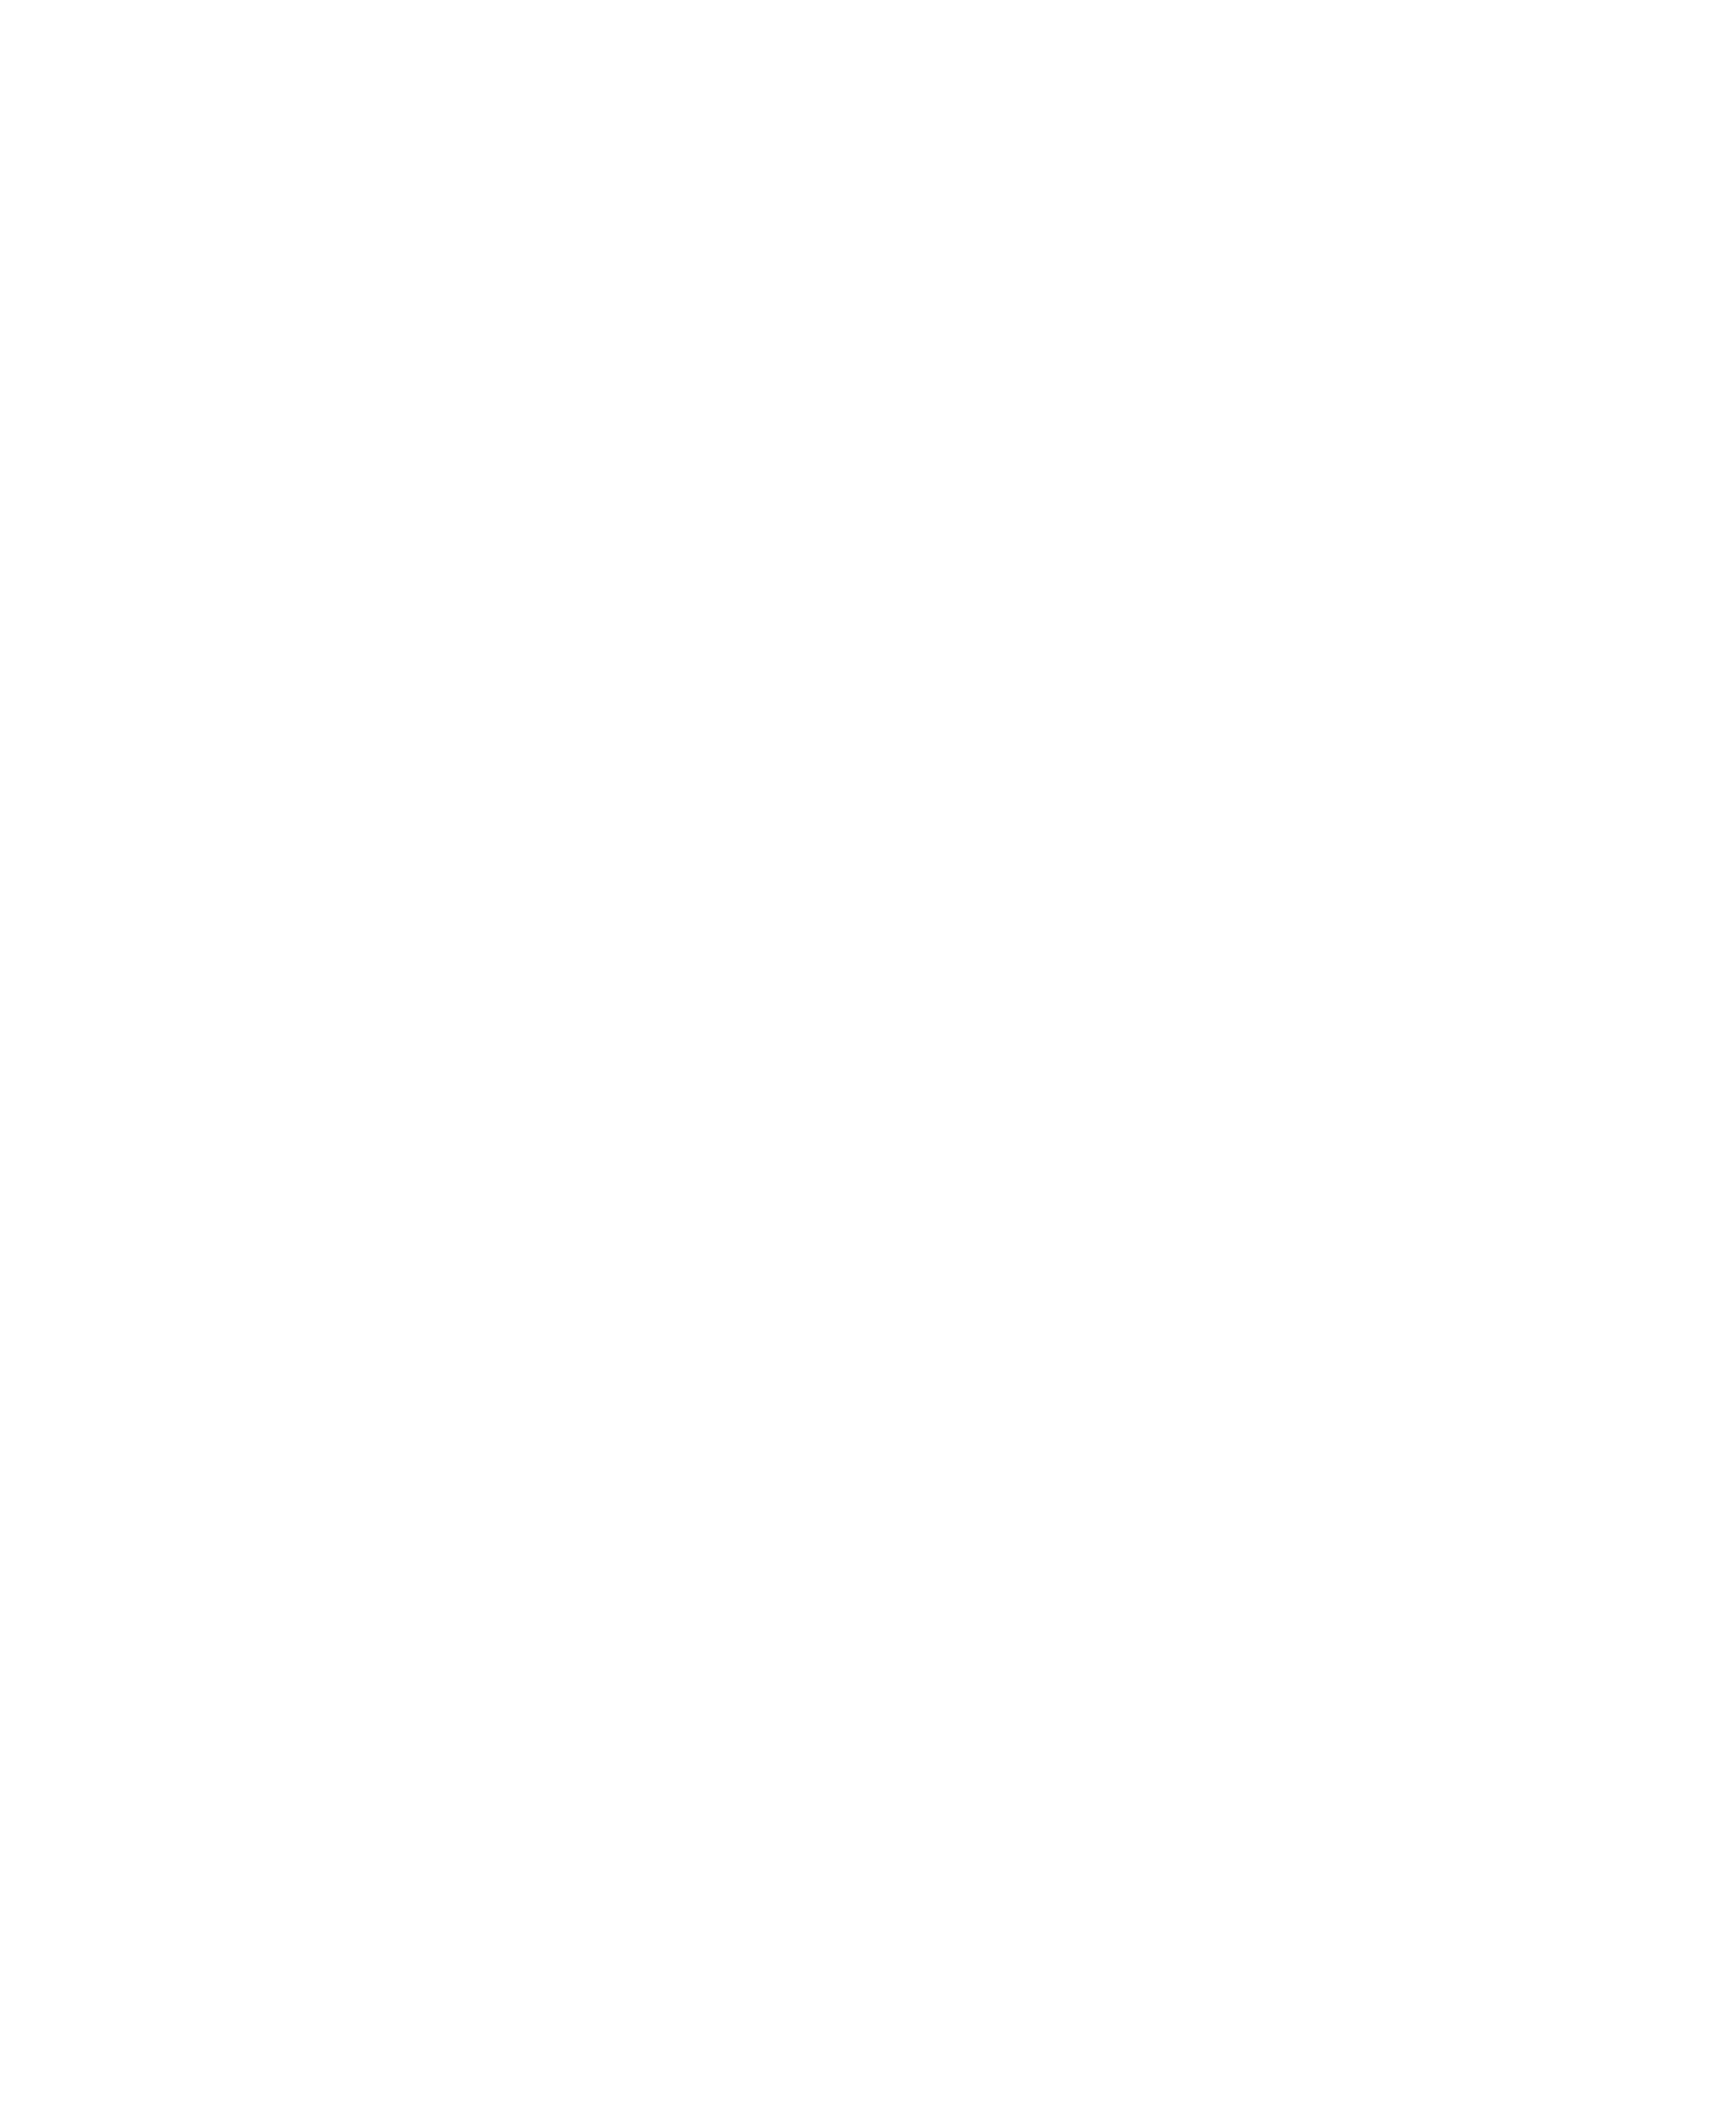 TO HORSES